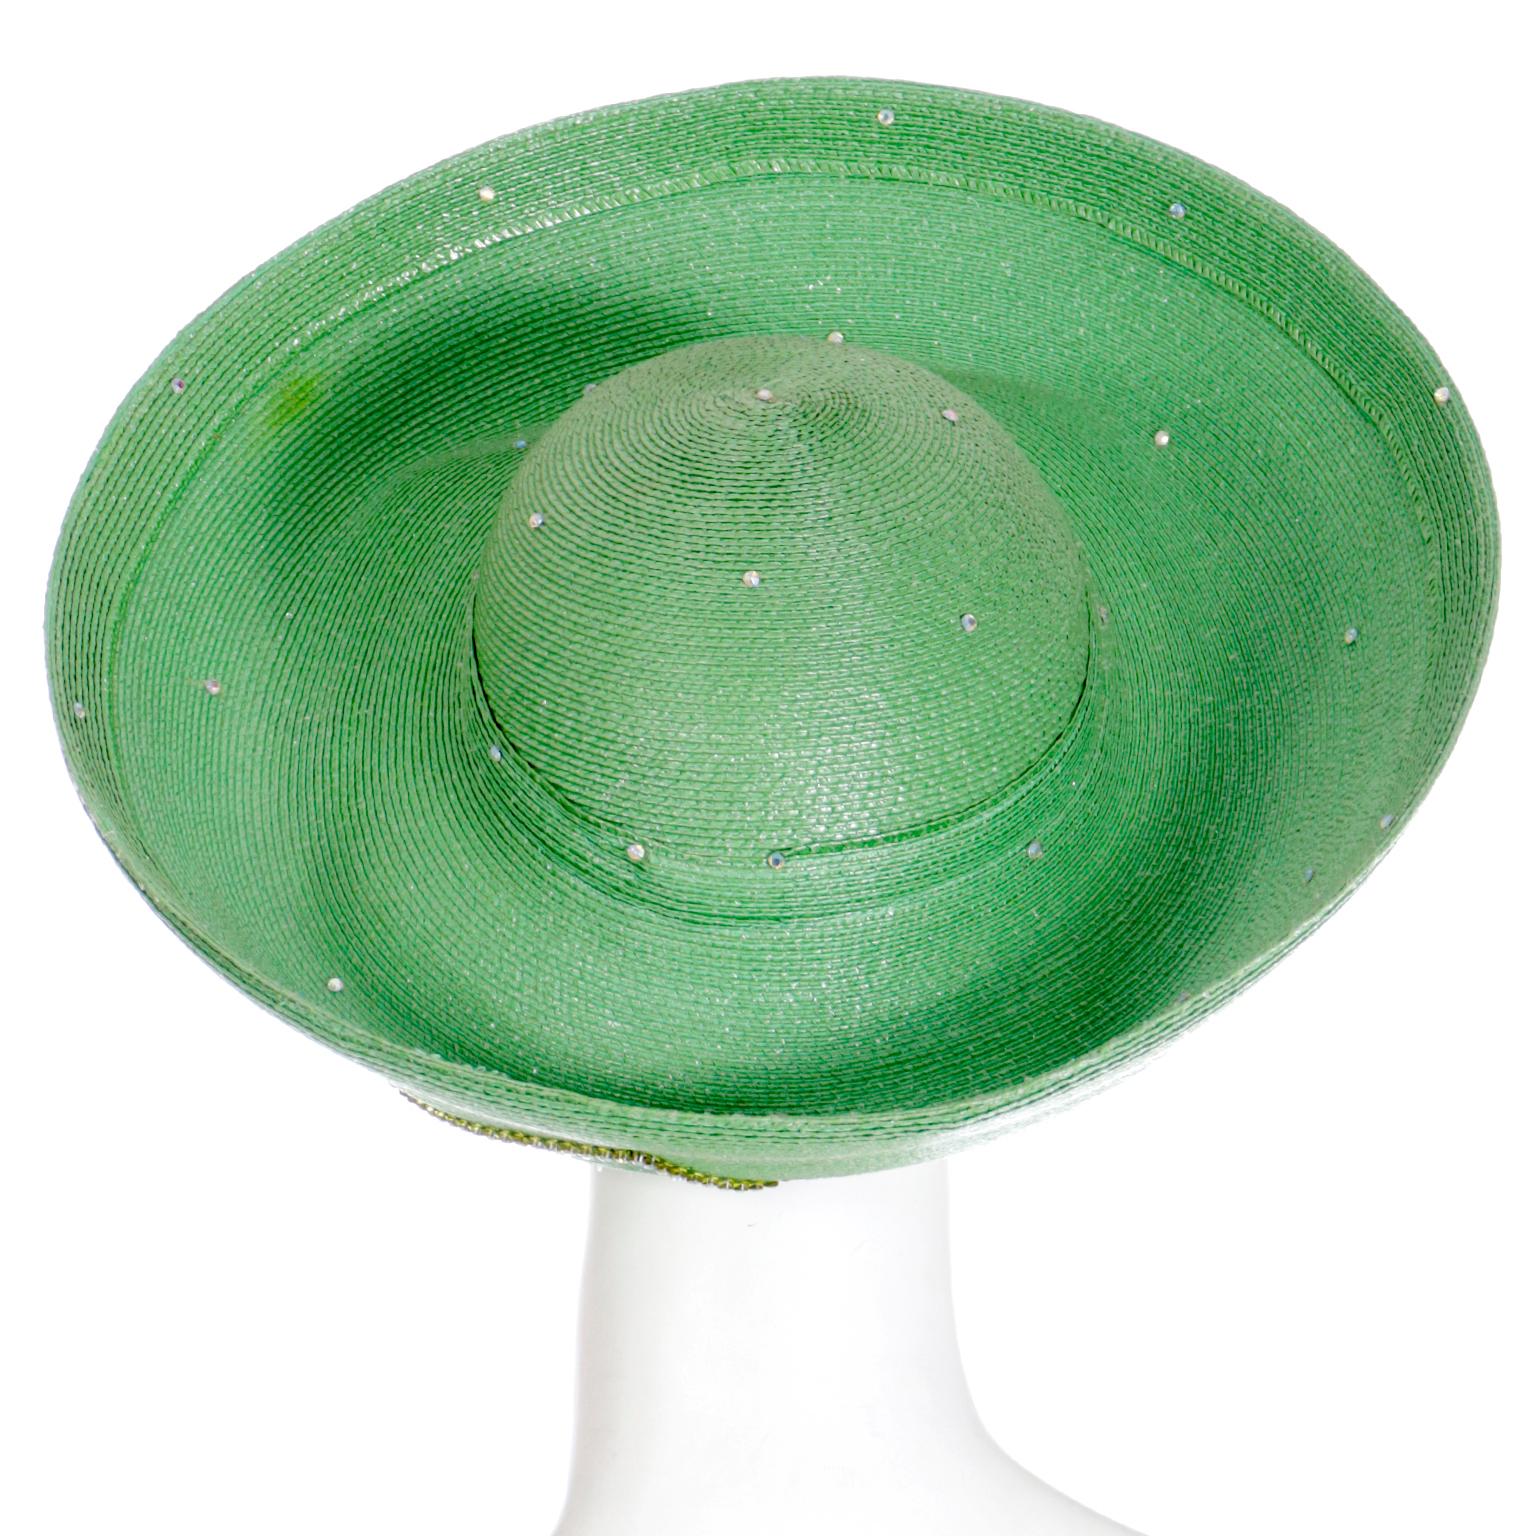 Women's Makins Vintage Church Lady Turban Style Green Straw Hat with Rhinestones